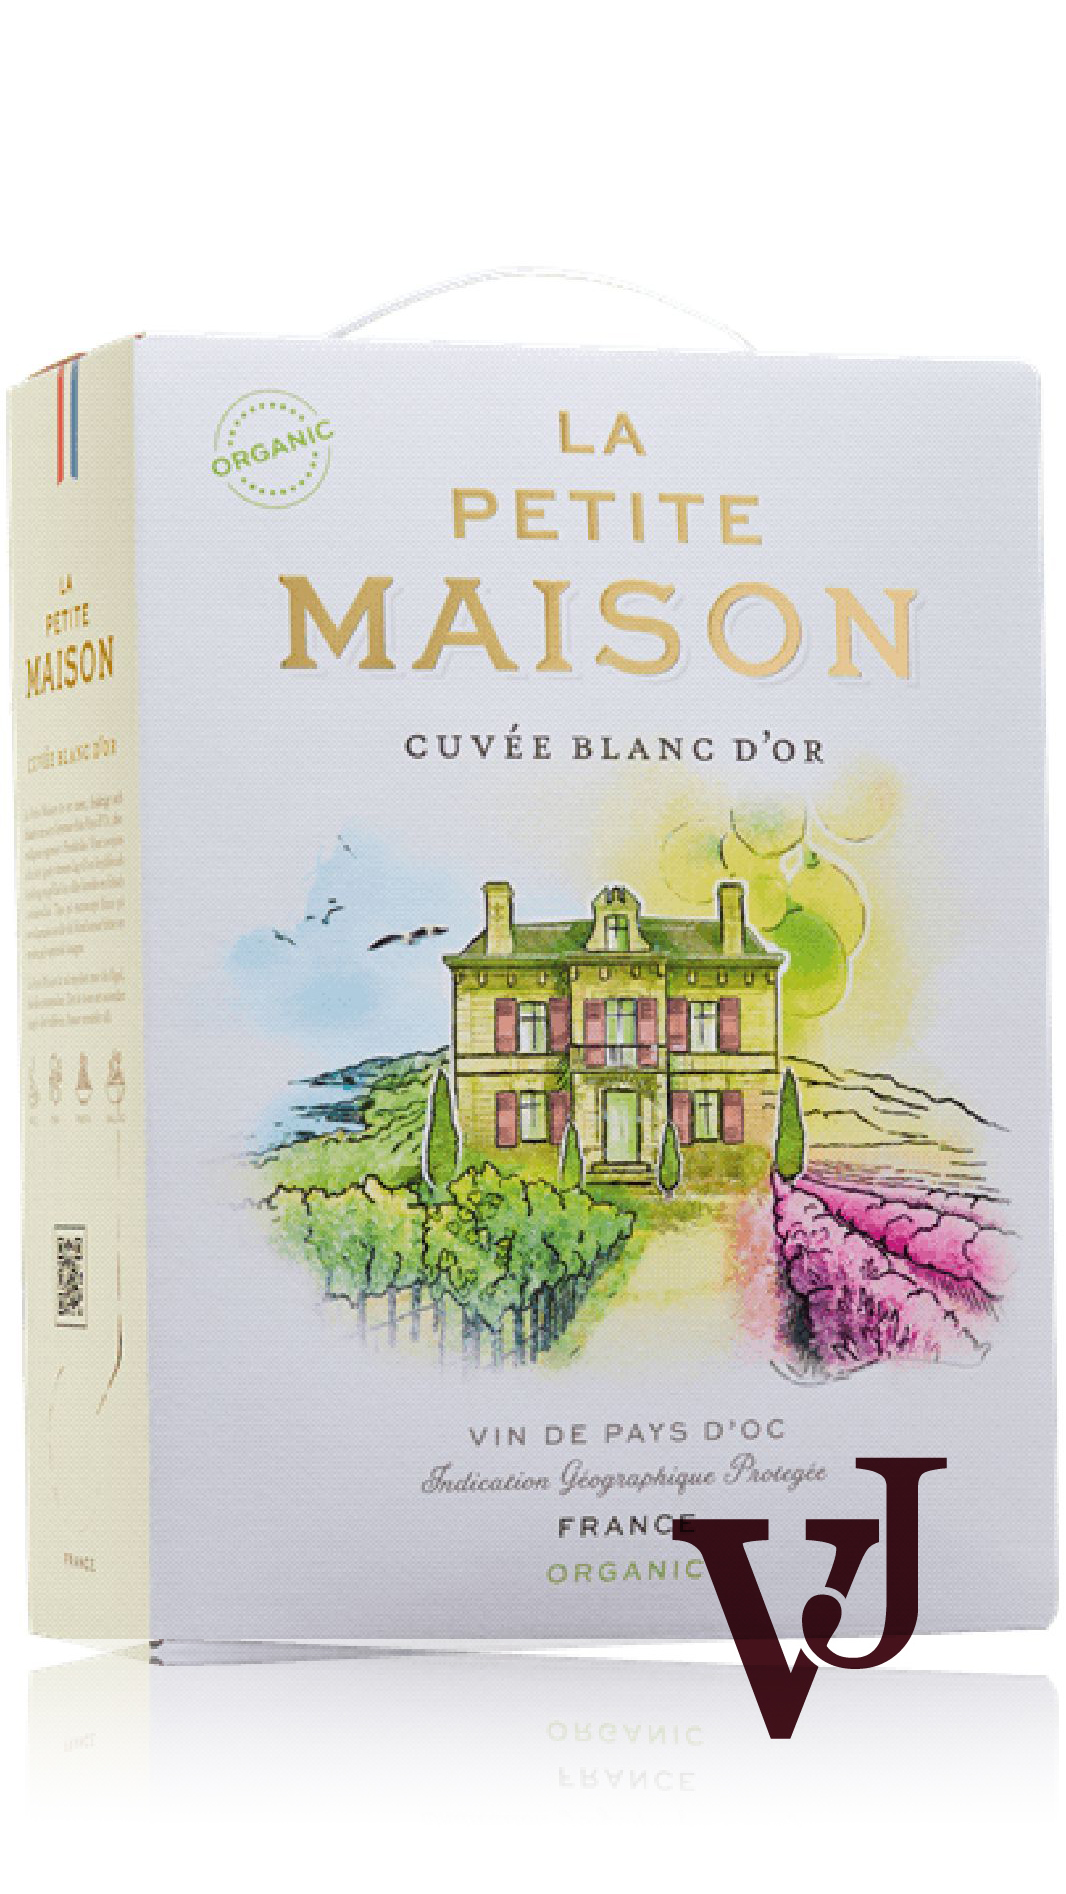 Vitt Vin - La Petite Maison Cuvée Blanc d’Or artikel nummer 310008 från producenten Vignobles du Soleil från området Frankrike - Vinjournalen.se